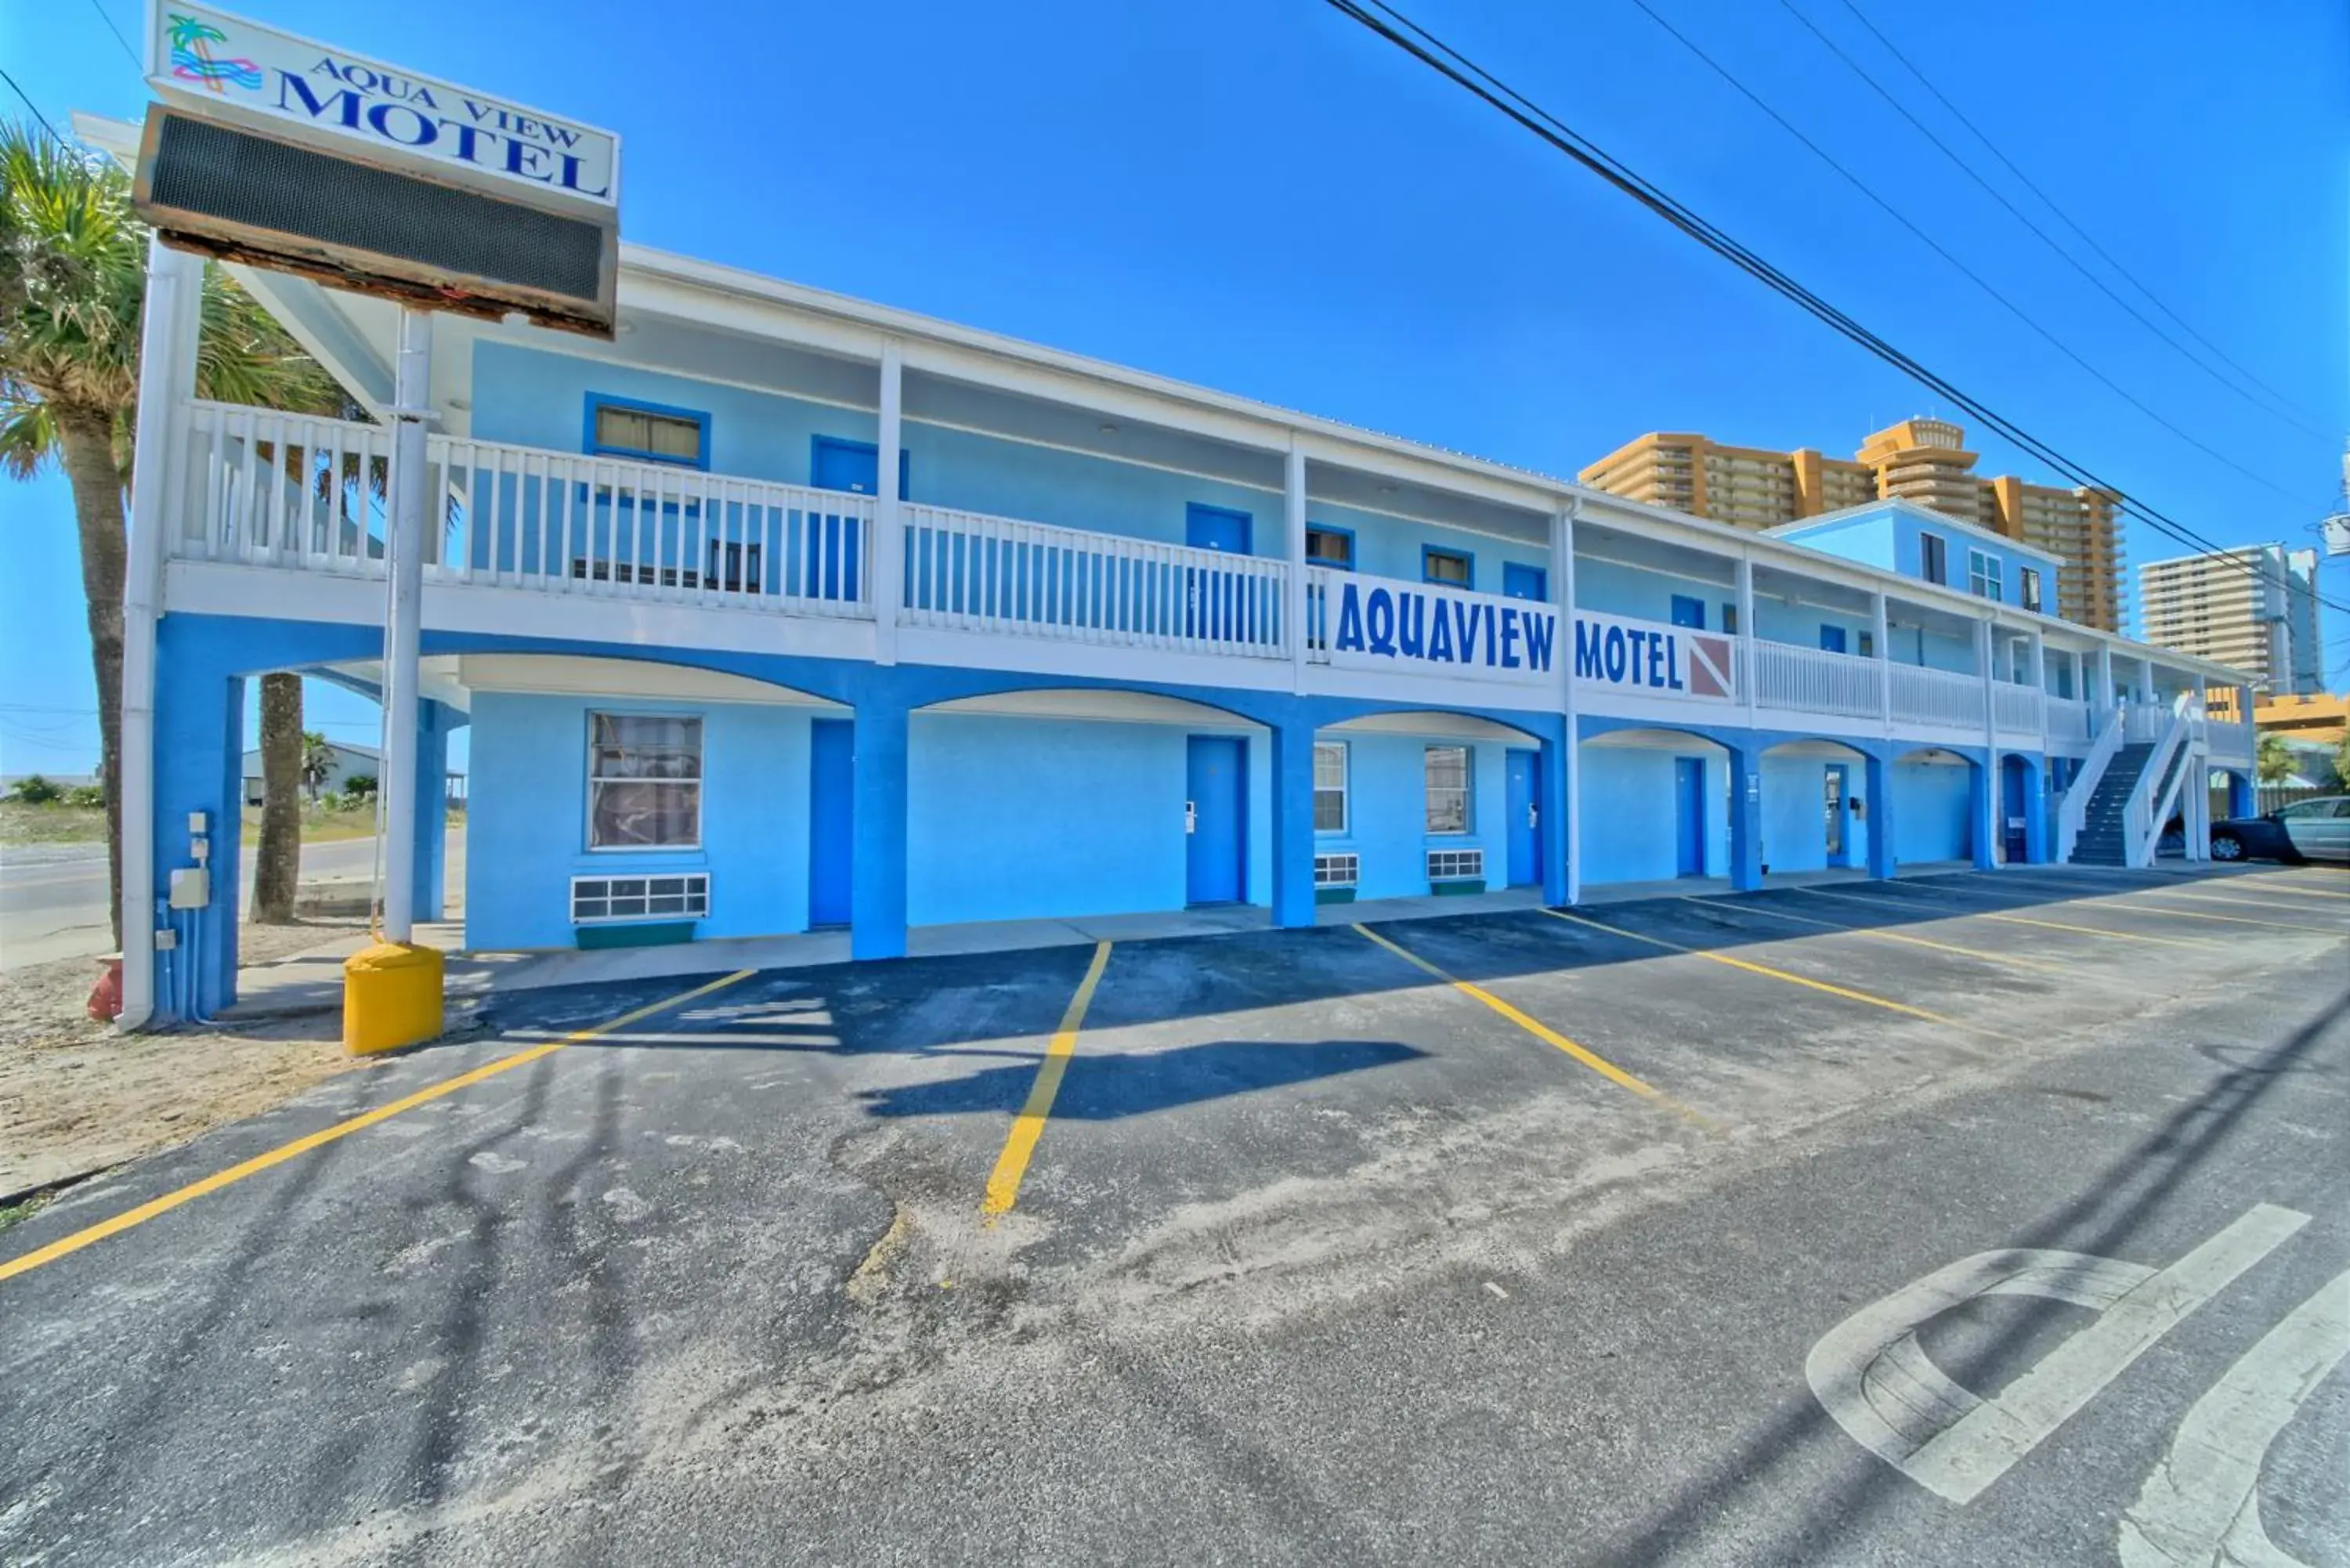 Property building in Aqua View Motel